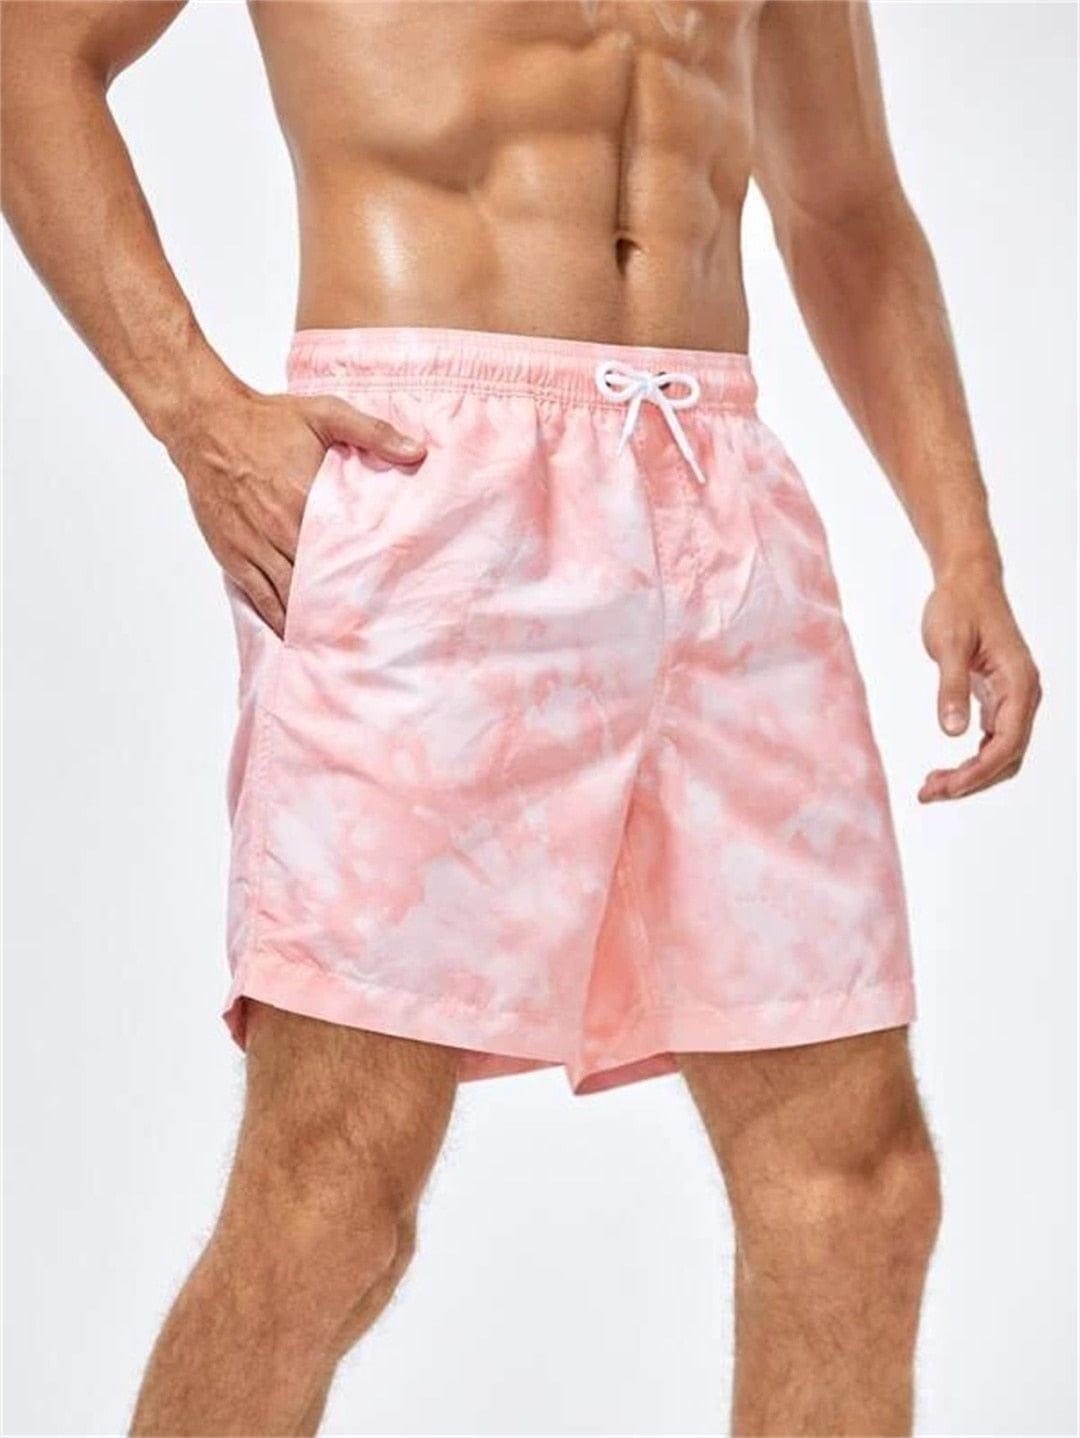 David swim shorts trunks (Plus sizes) Verso Pink S 